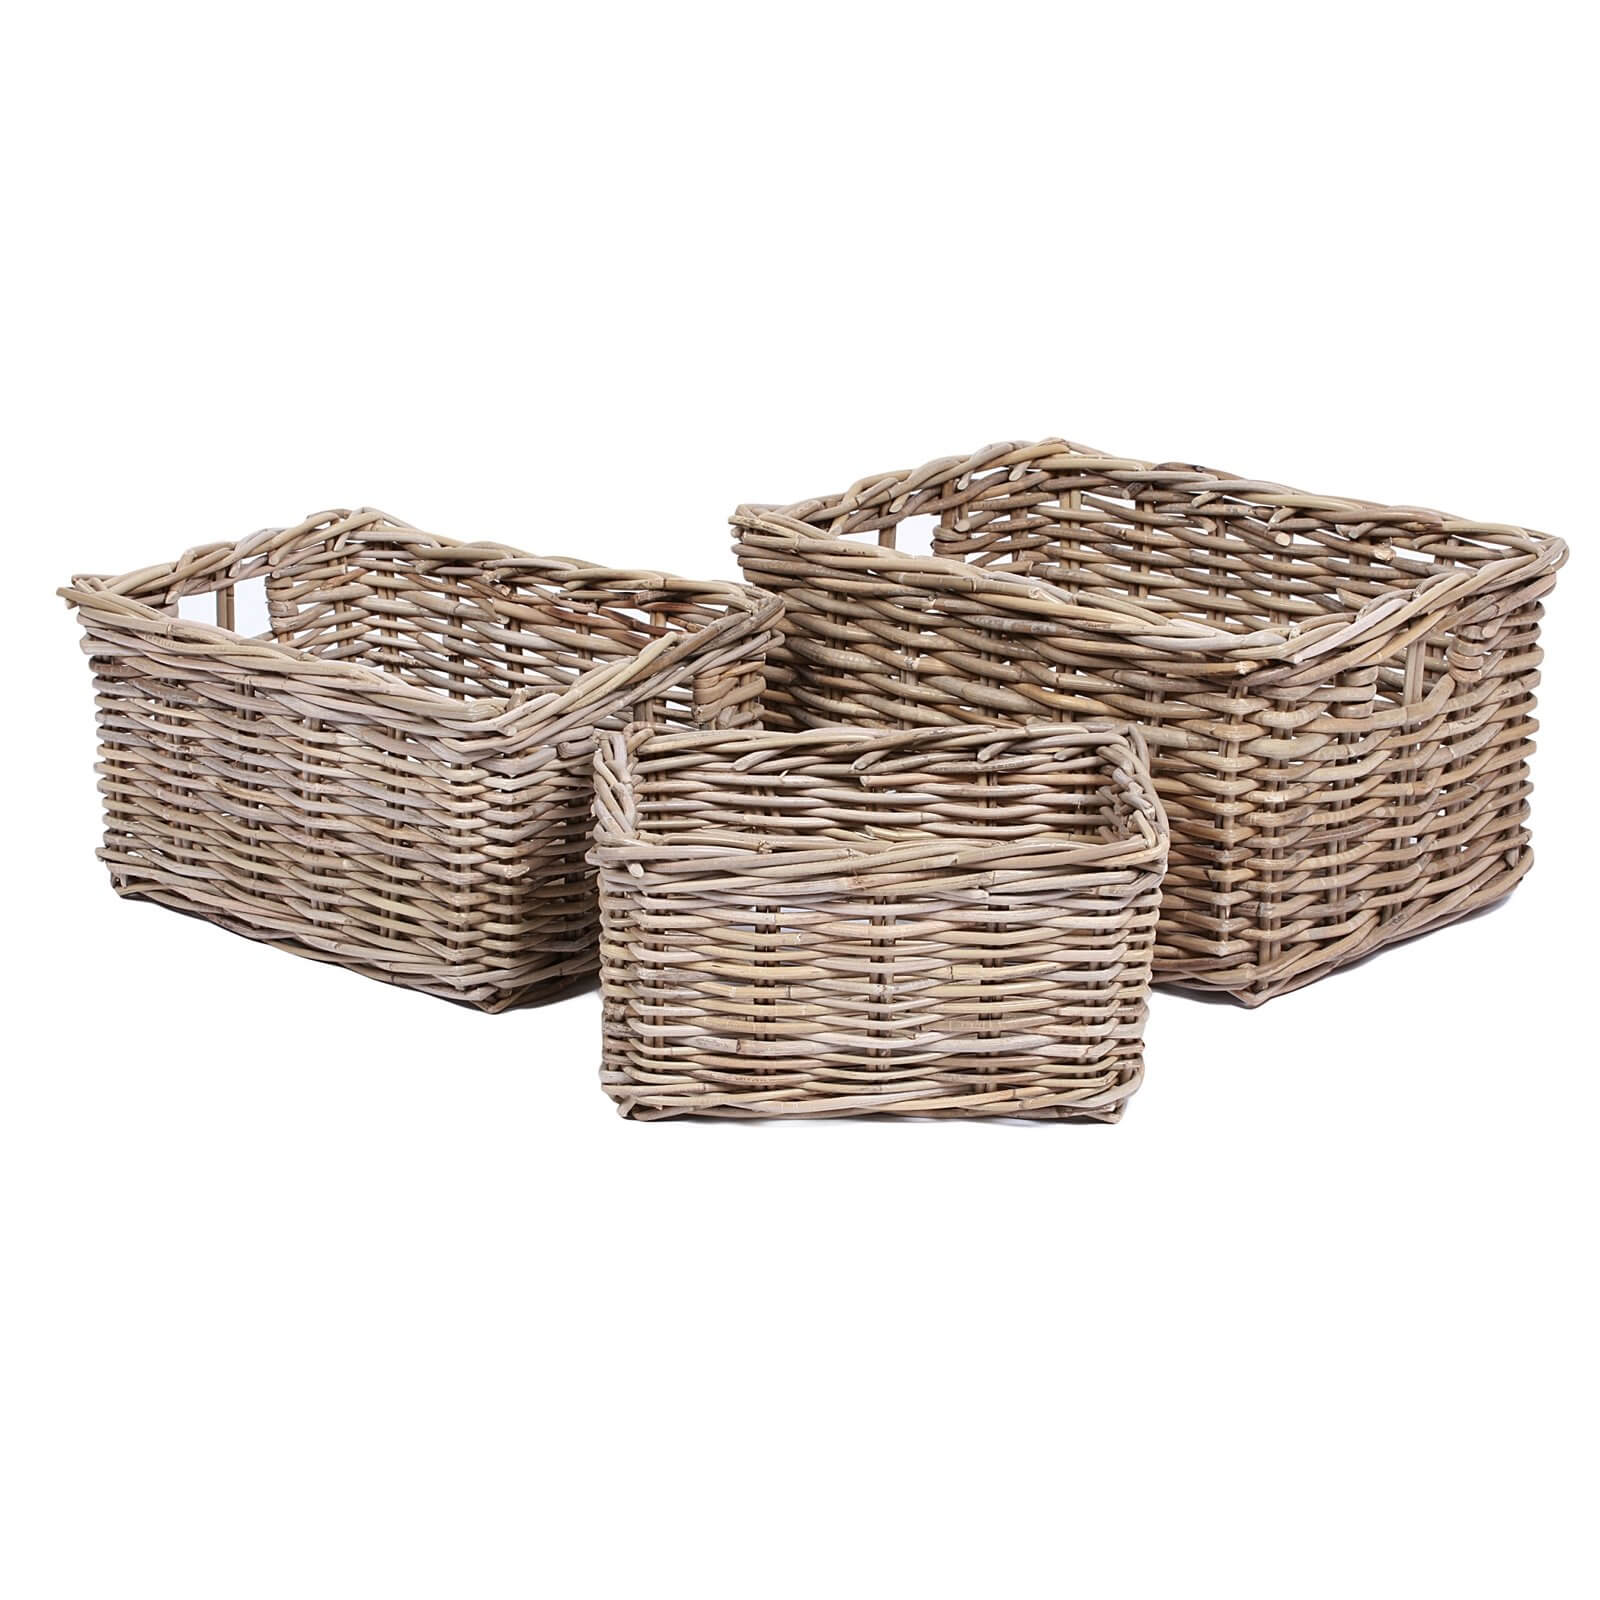 Set of 3 Rectangular Wicker Baskets